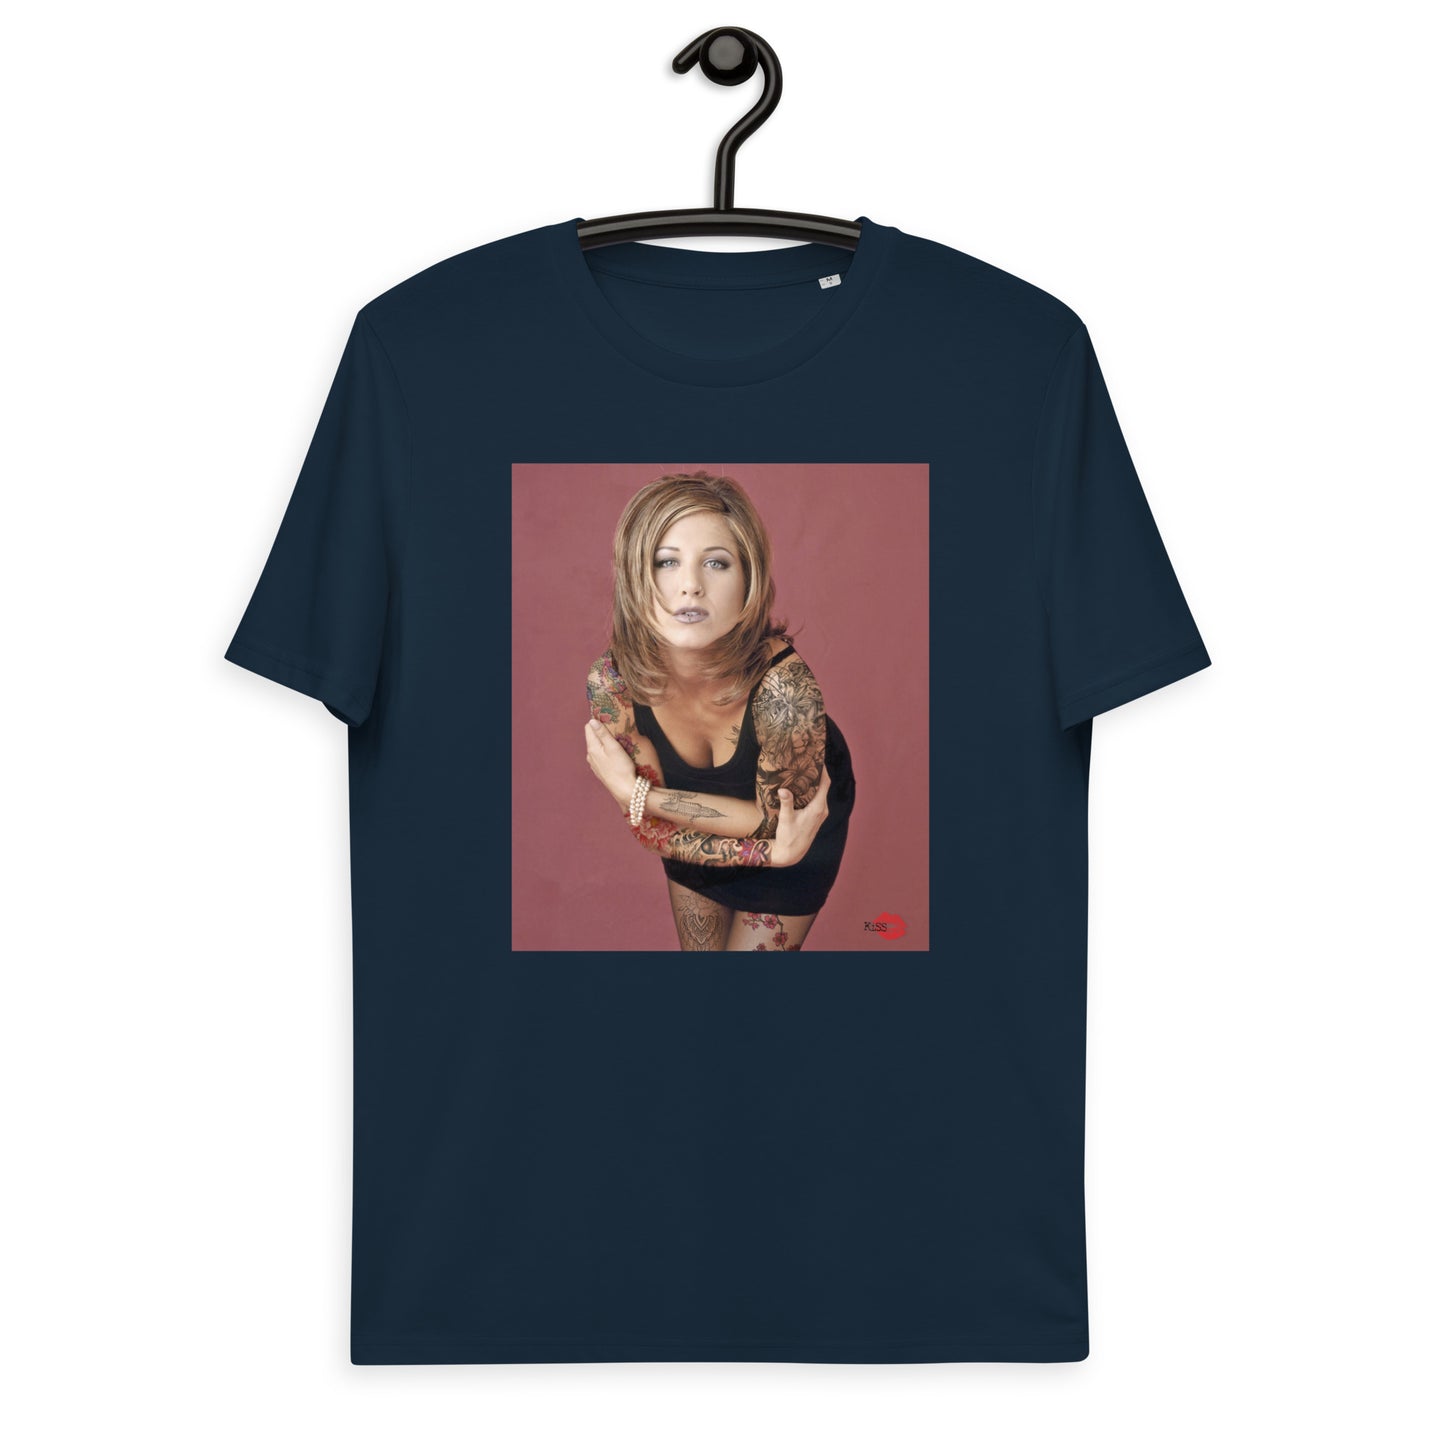 Inked Rachel Green KiSS Unisex organic cotton t-shirt - 90s Friends Alternative Jennifer Aniston